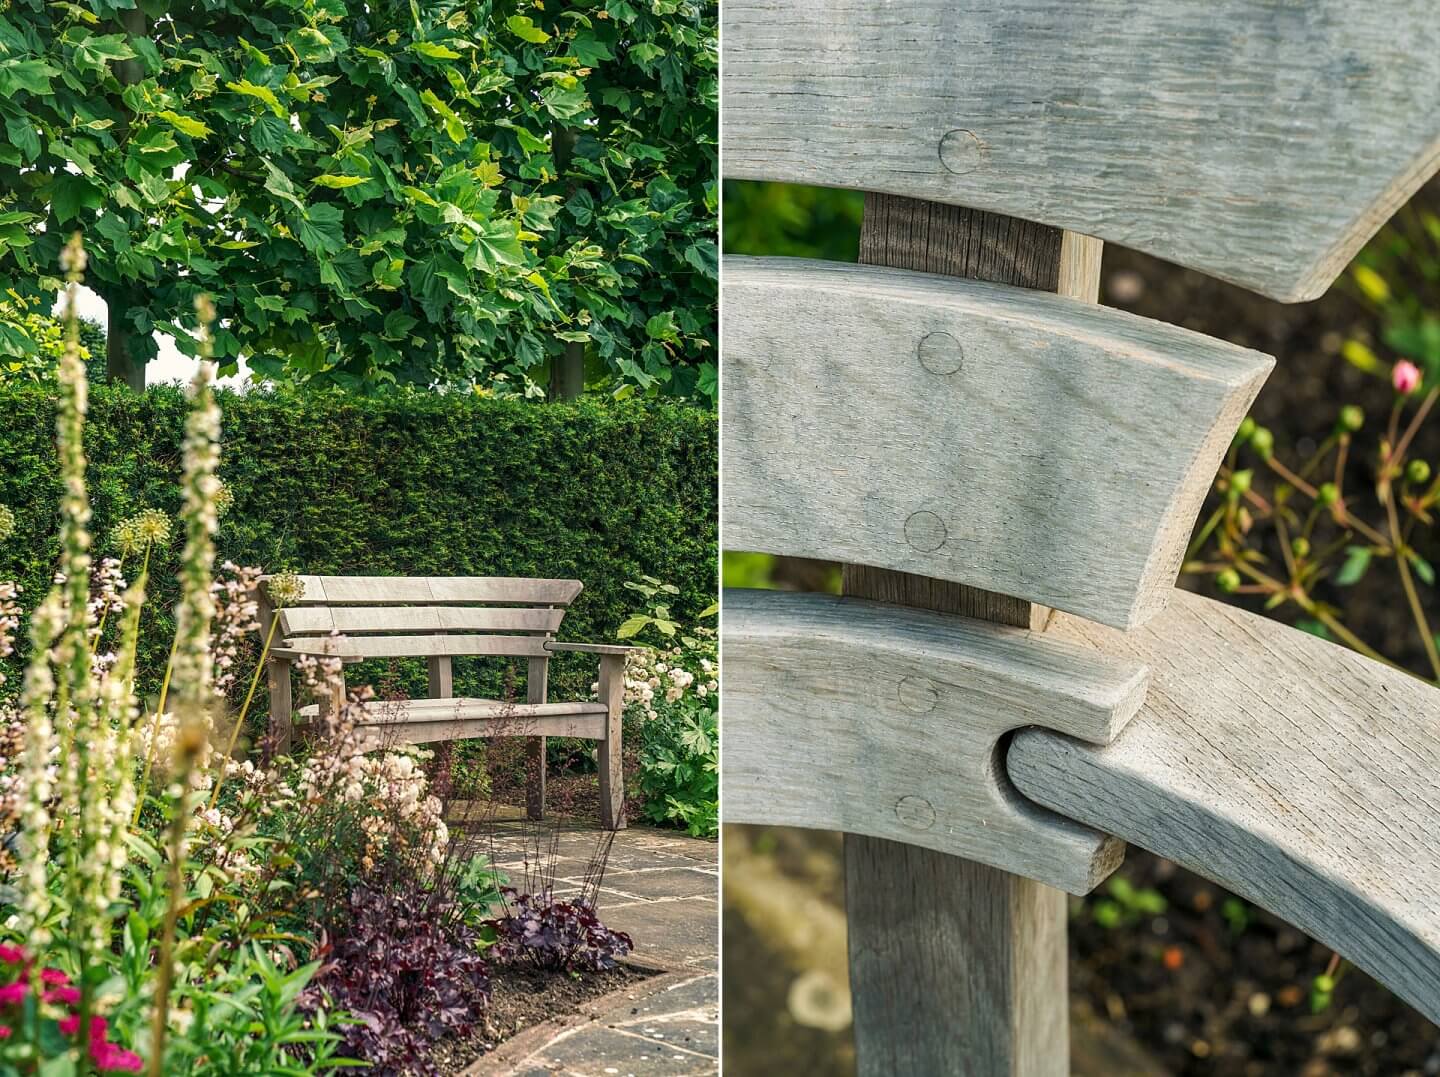 craftsmanship details on handmade wooden furniture outdoor seating